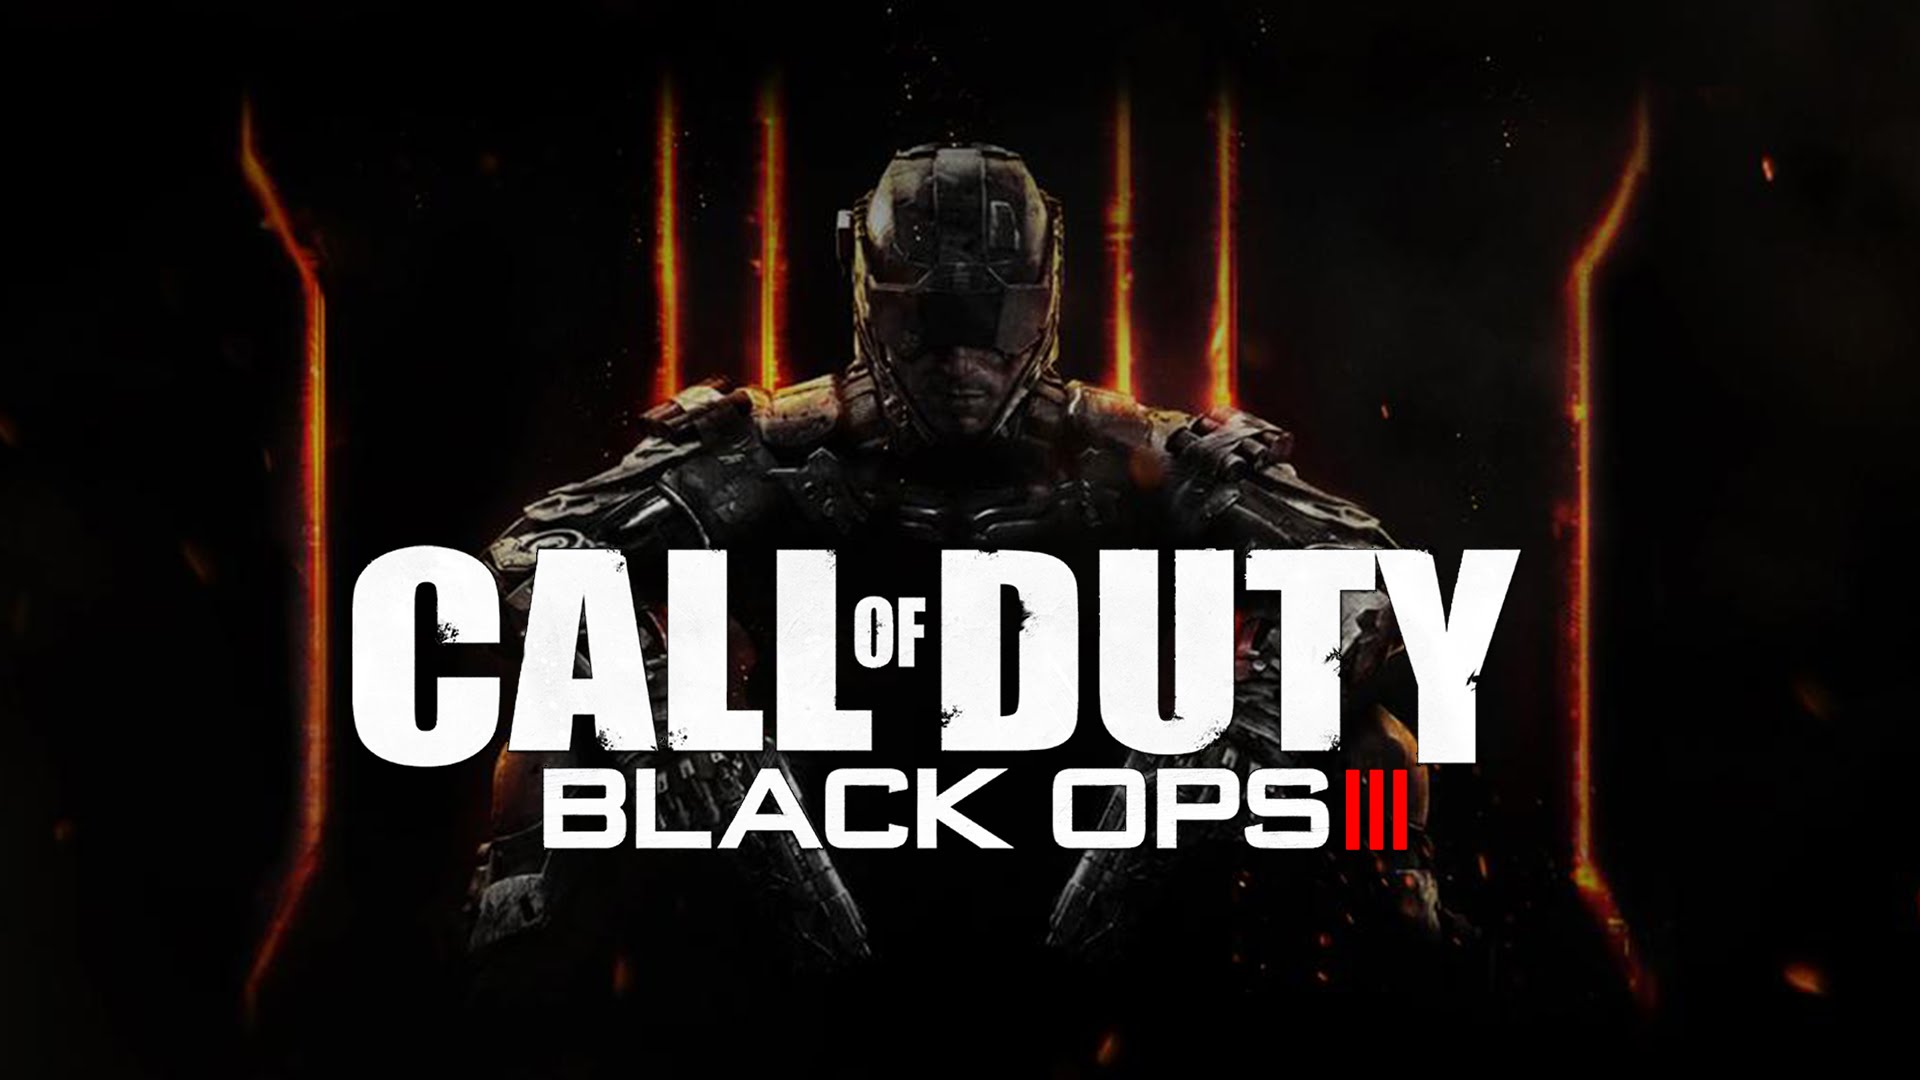 Call of duty black ops 3 wallpaper 4vo4wqr Newbies Gaming